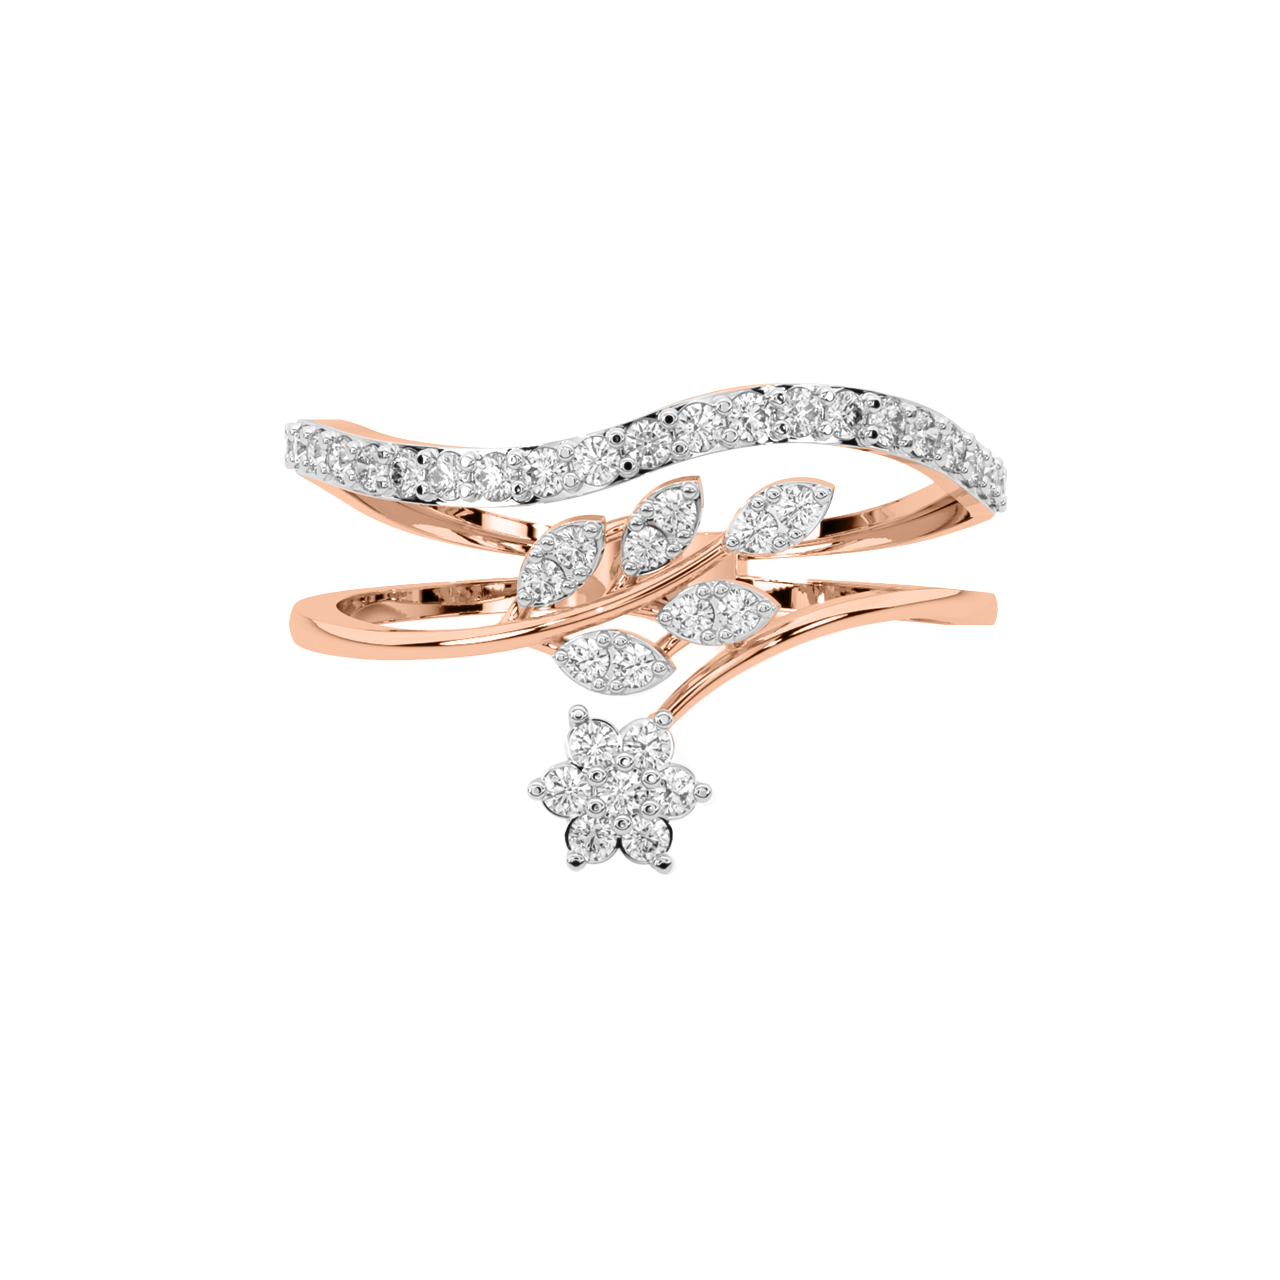 Multirow Diamond Ring in Whitegold and Rosegold